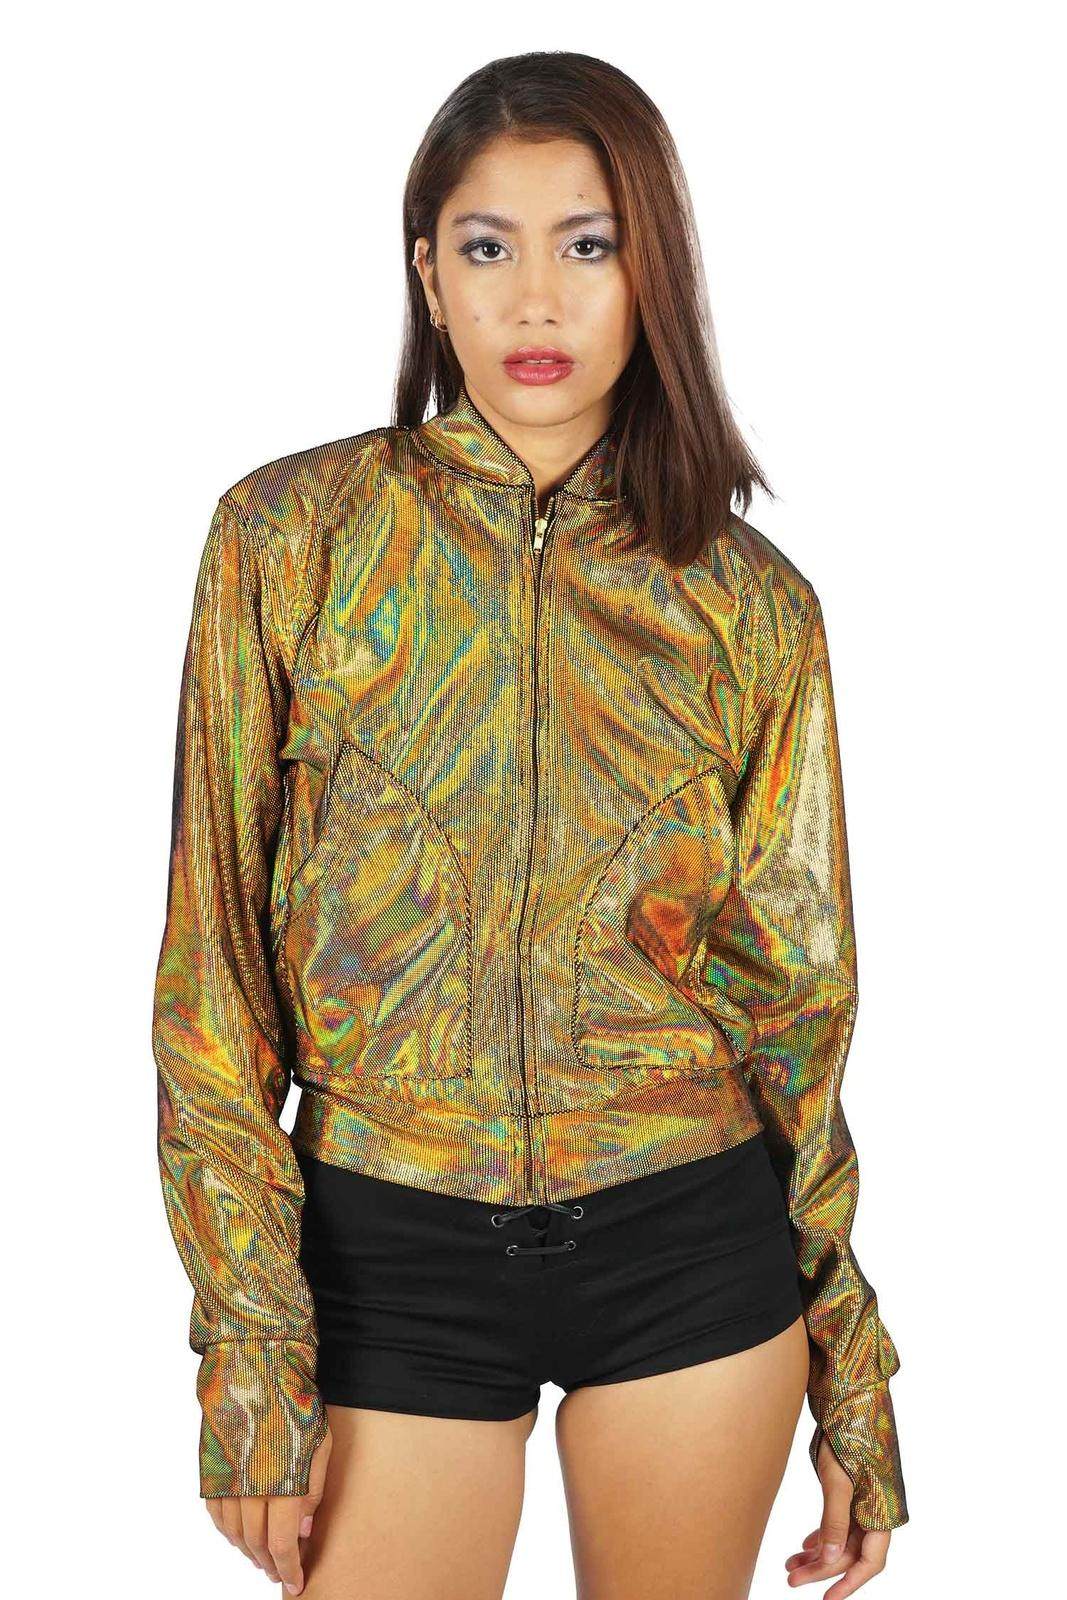 womens gold bomber jacket from Love Khaos